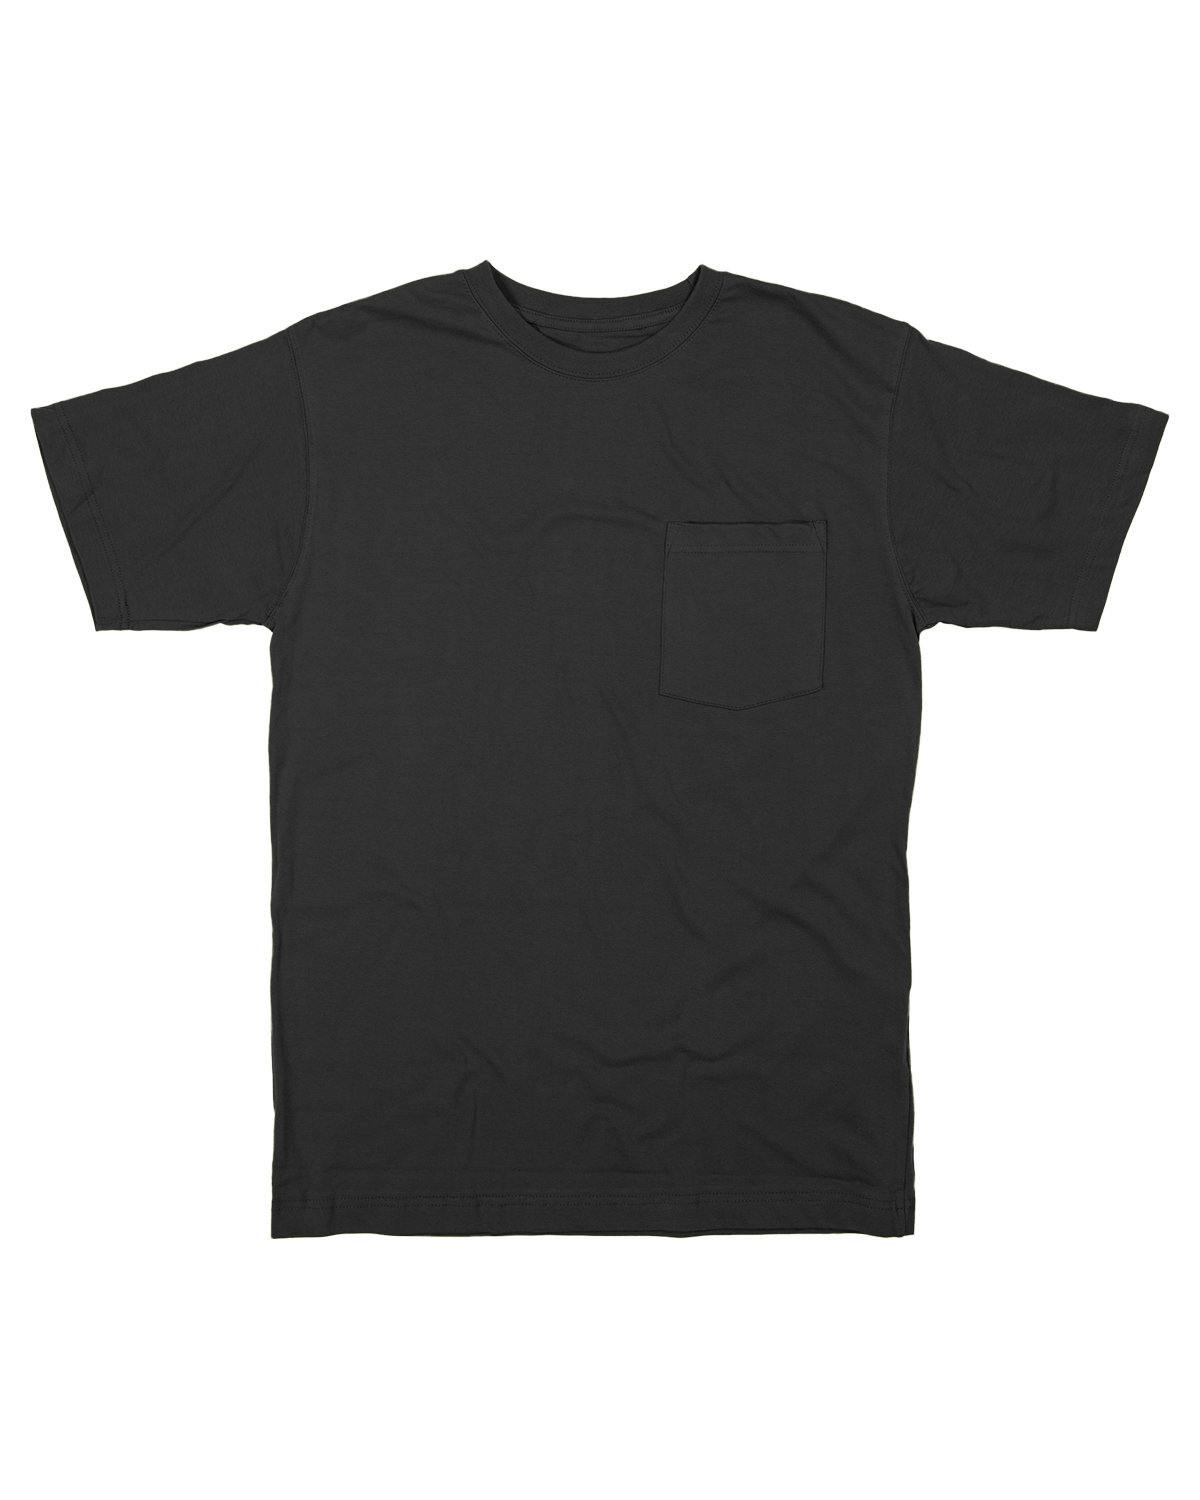 Image for Men's Heavyweight Pocket T-Shirt